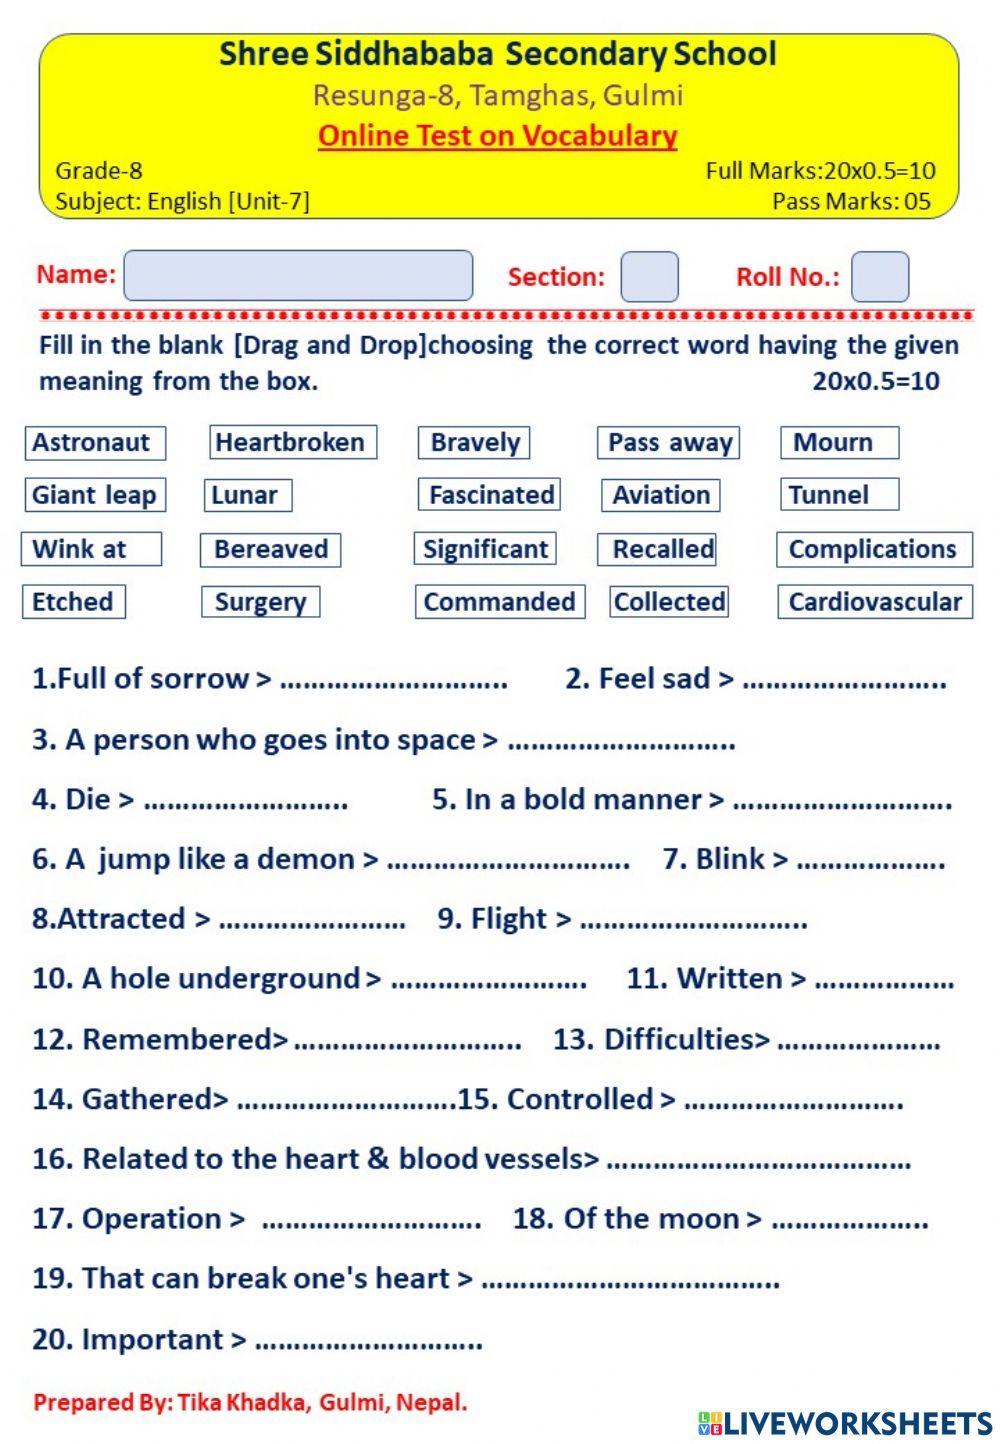 Vocabulary of Grade-8 English Unit-7